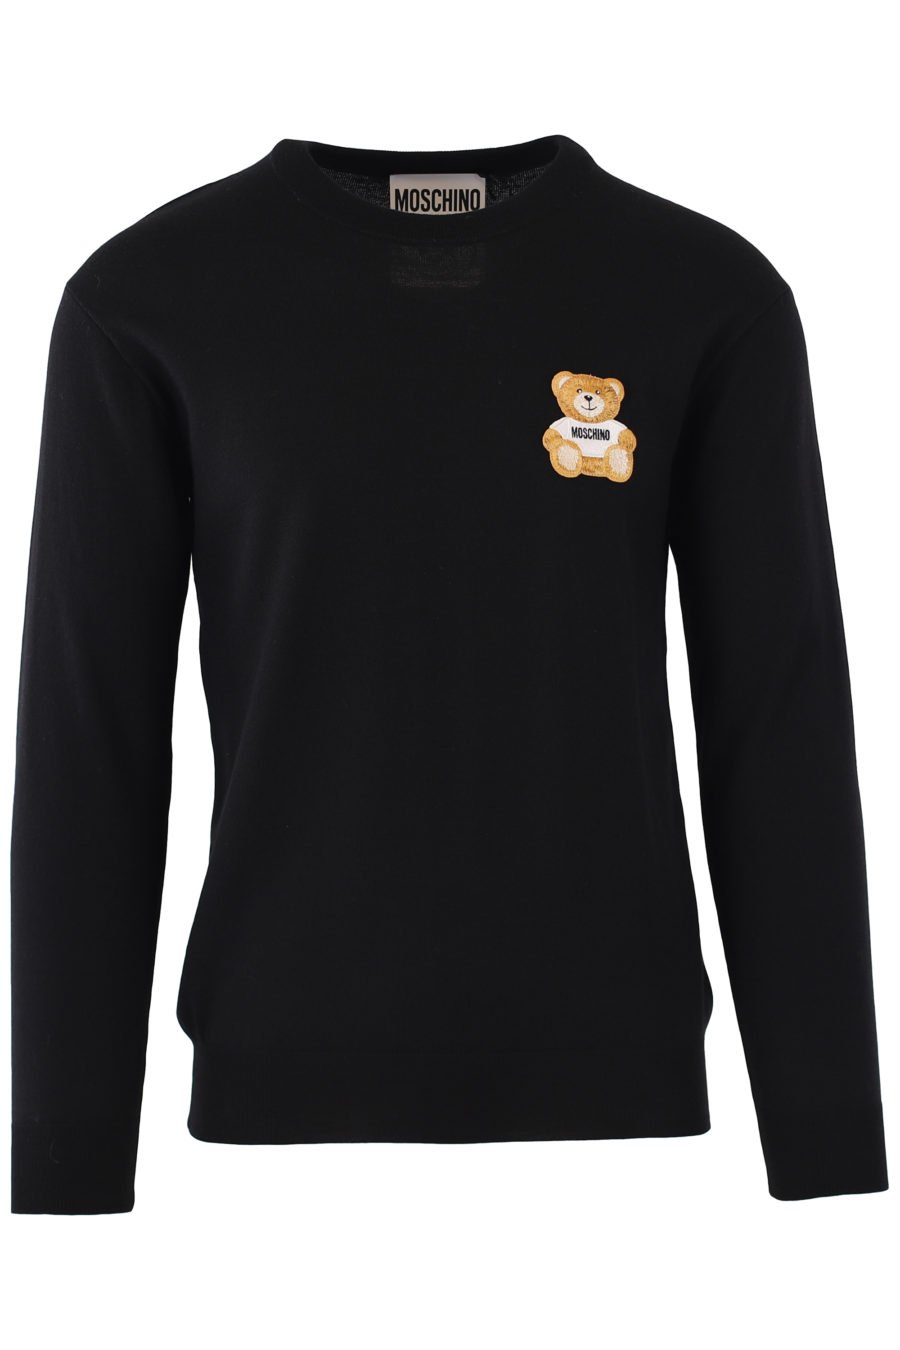 Black jumper with bear logo - IMG 9289